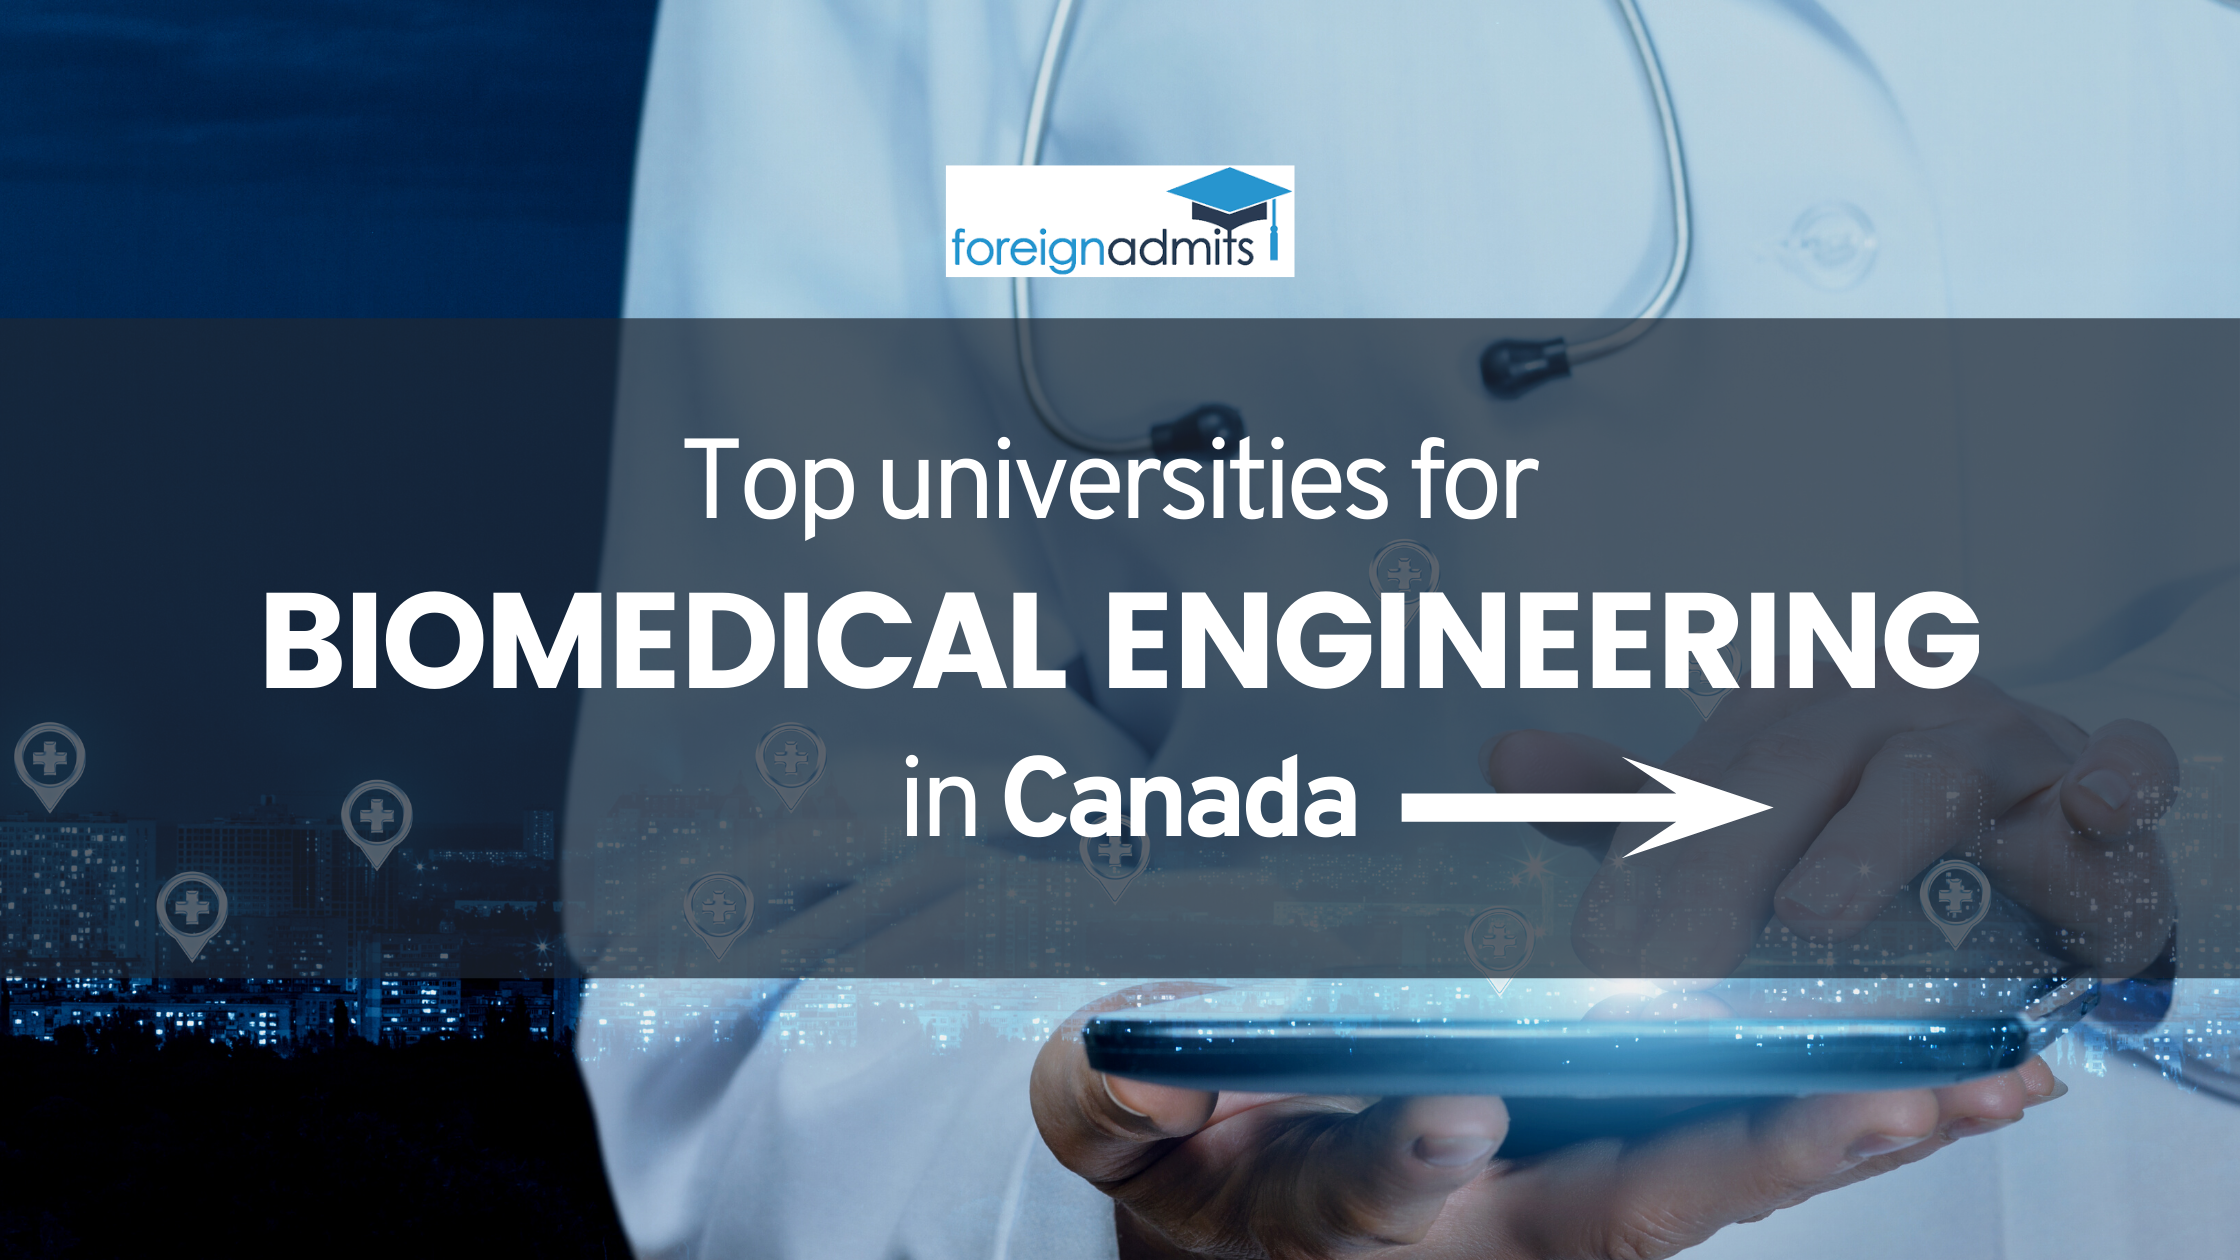 Top universities for Biomedical Engineering in Canada